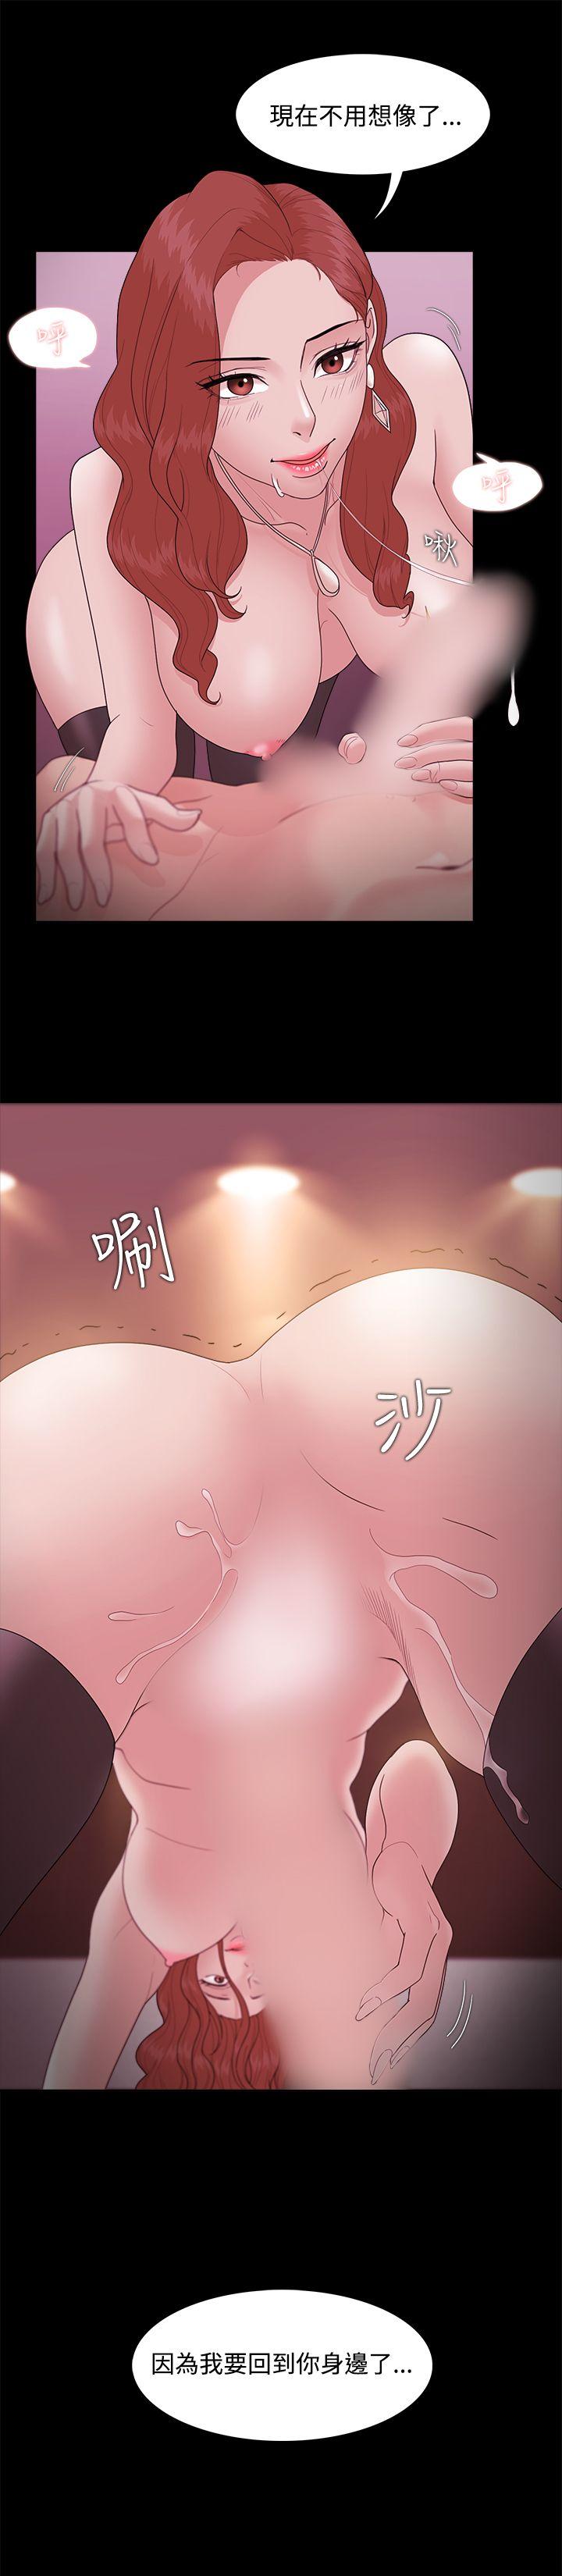 韩国污漫画 Loser 第15话 34